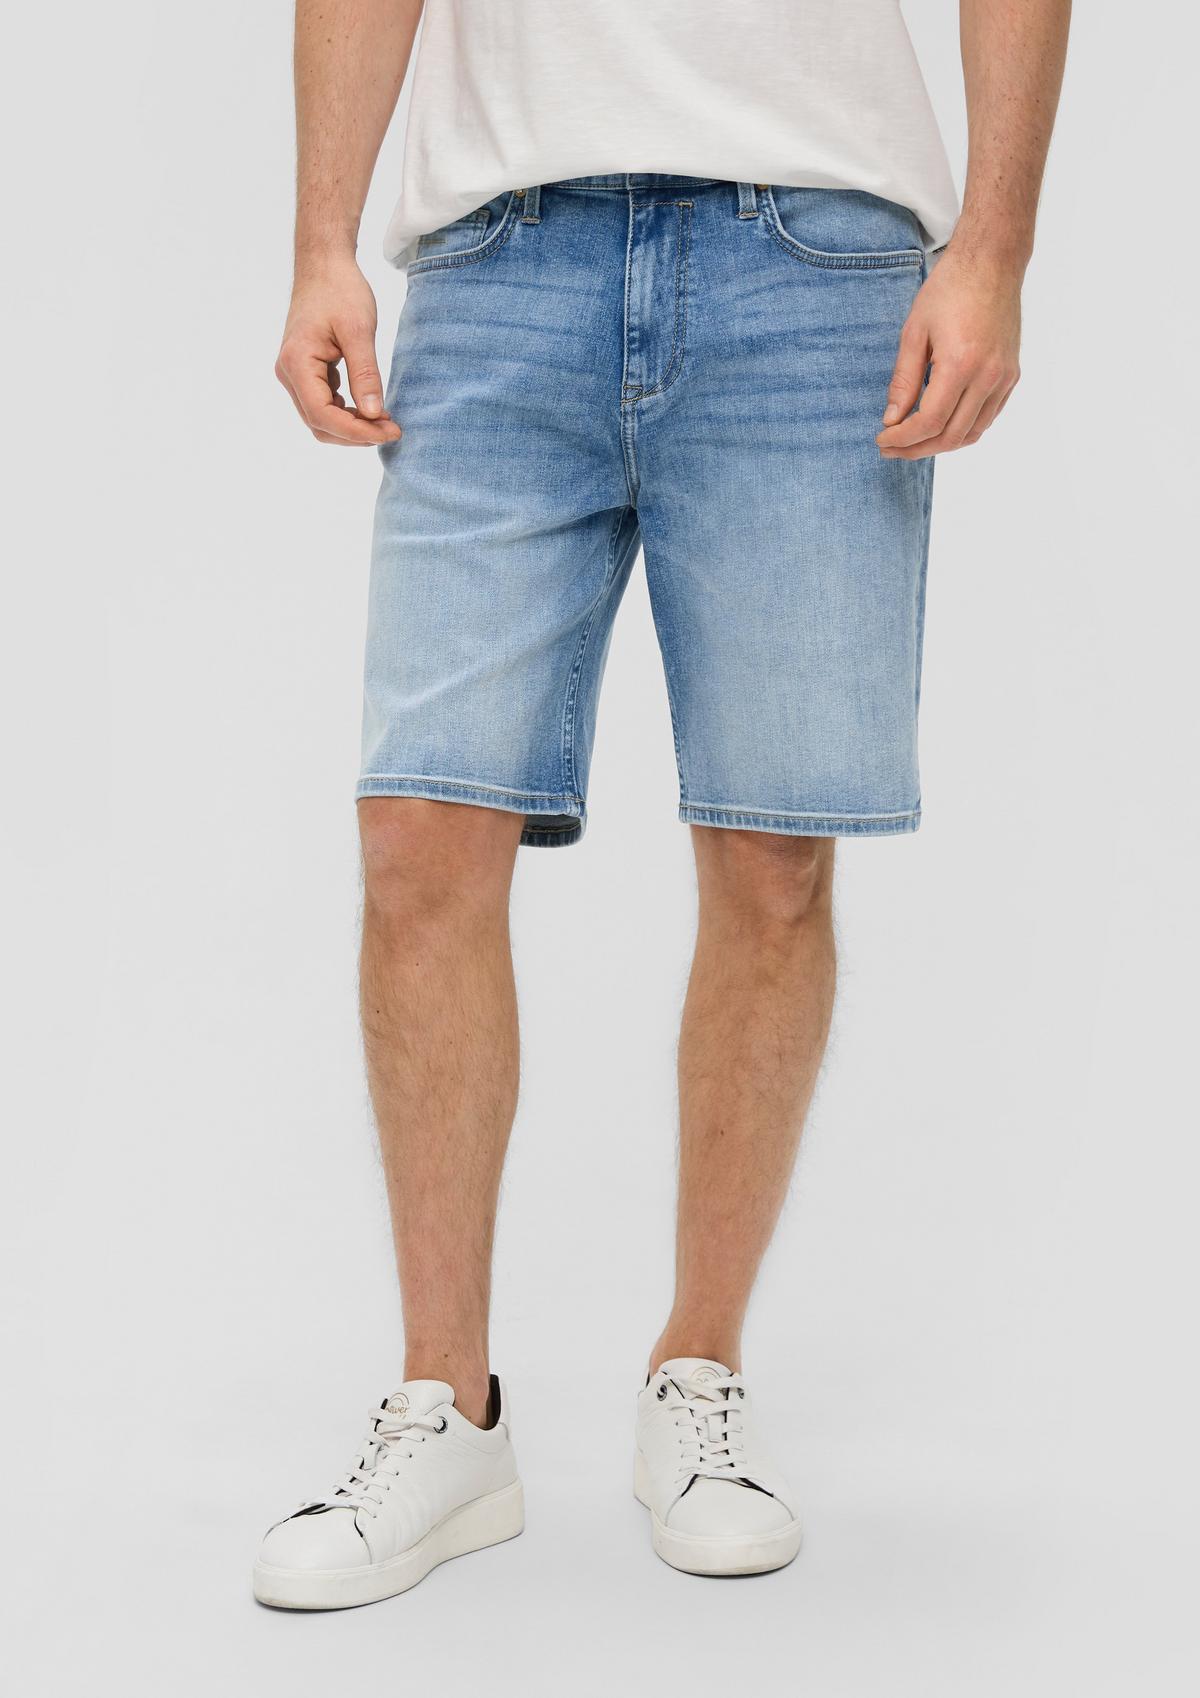 s.Oliver Short Jeans / Regular fit / Mid rise / Straight leg